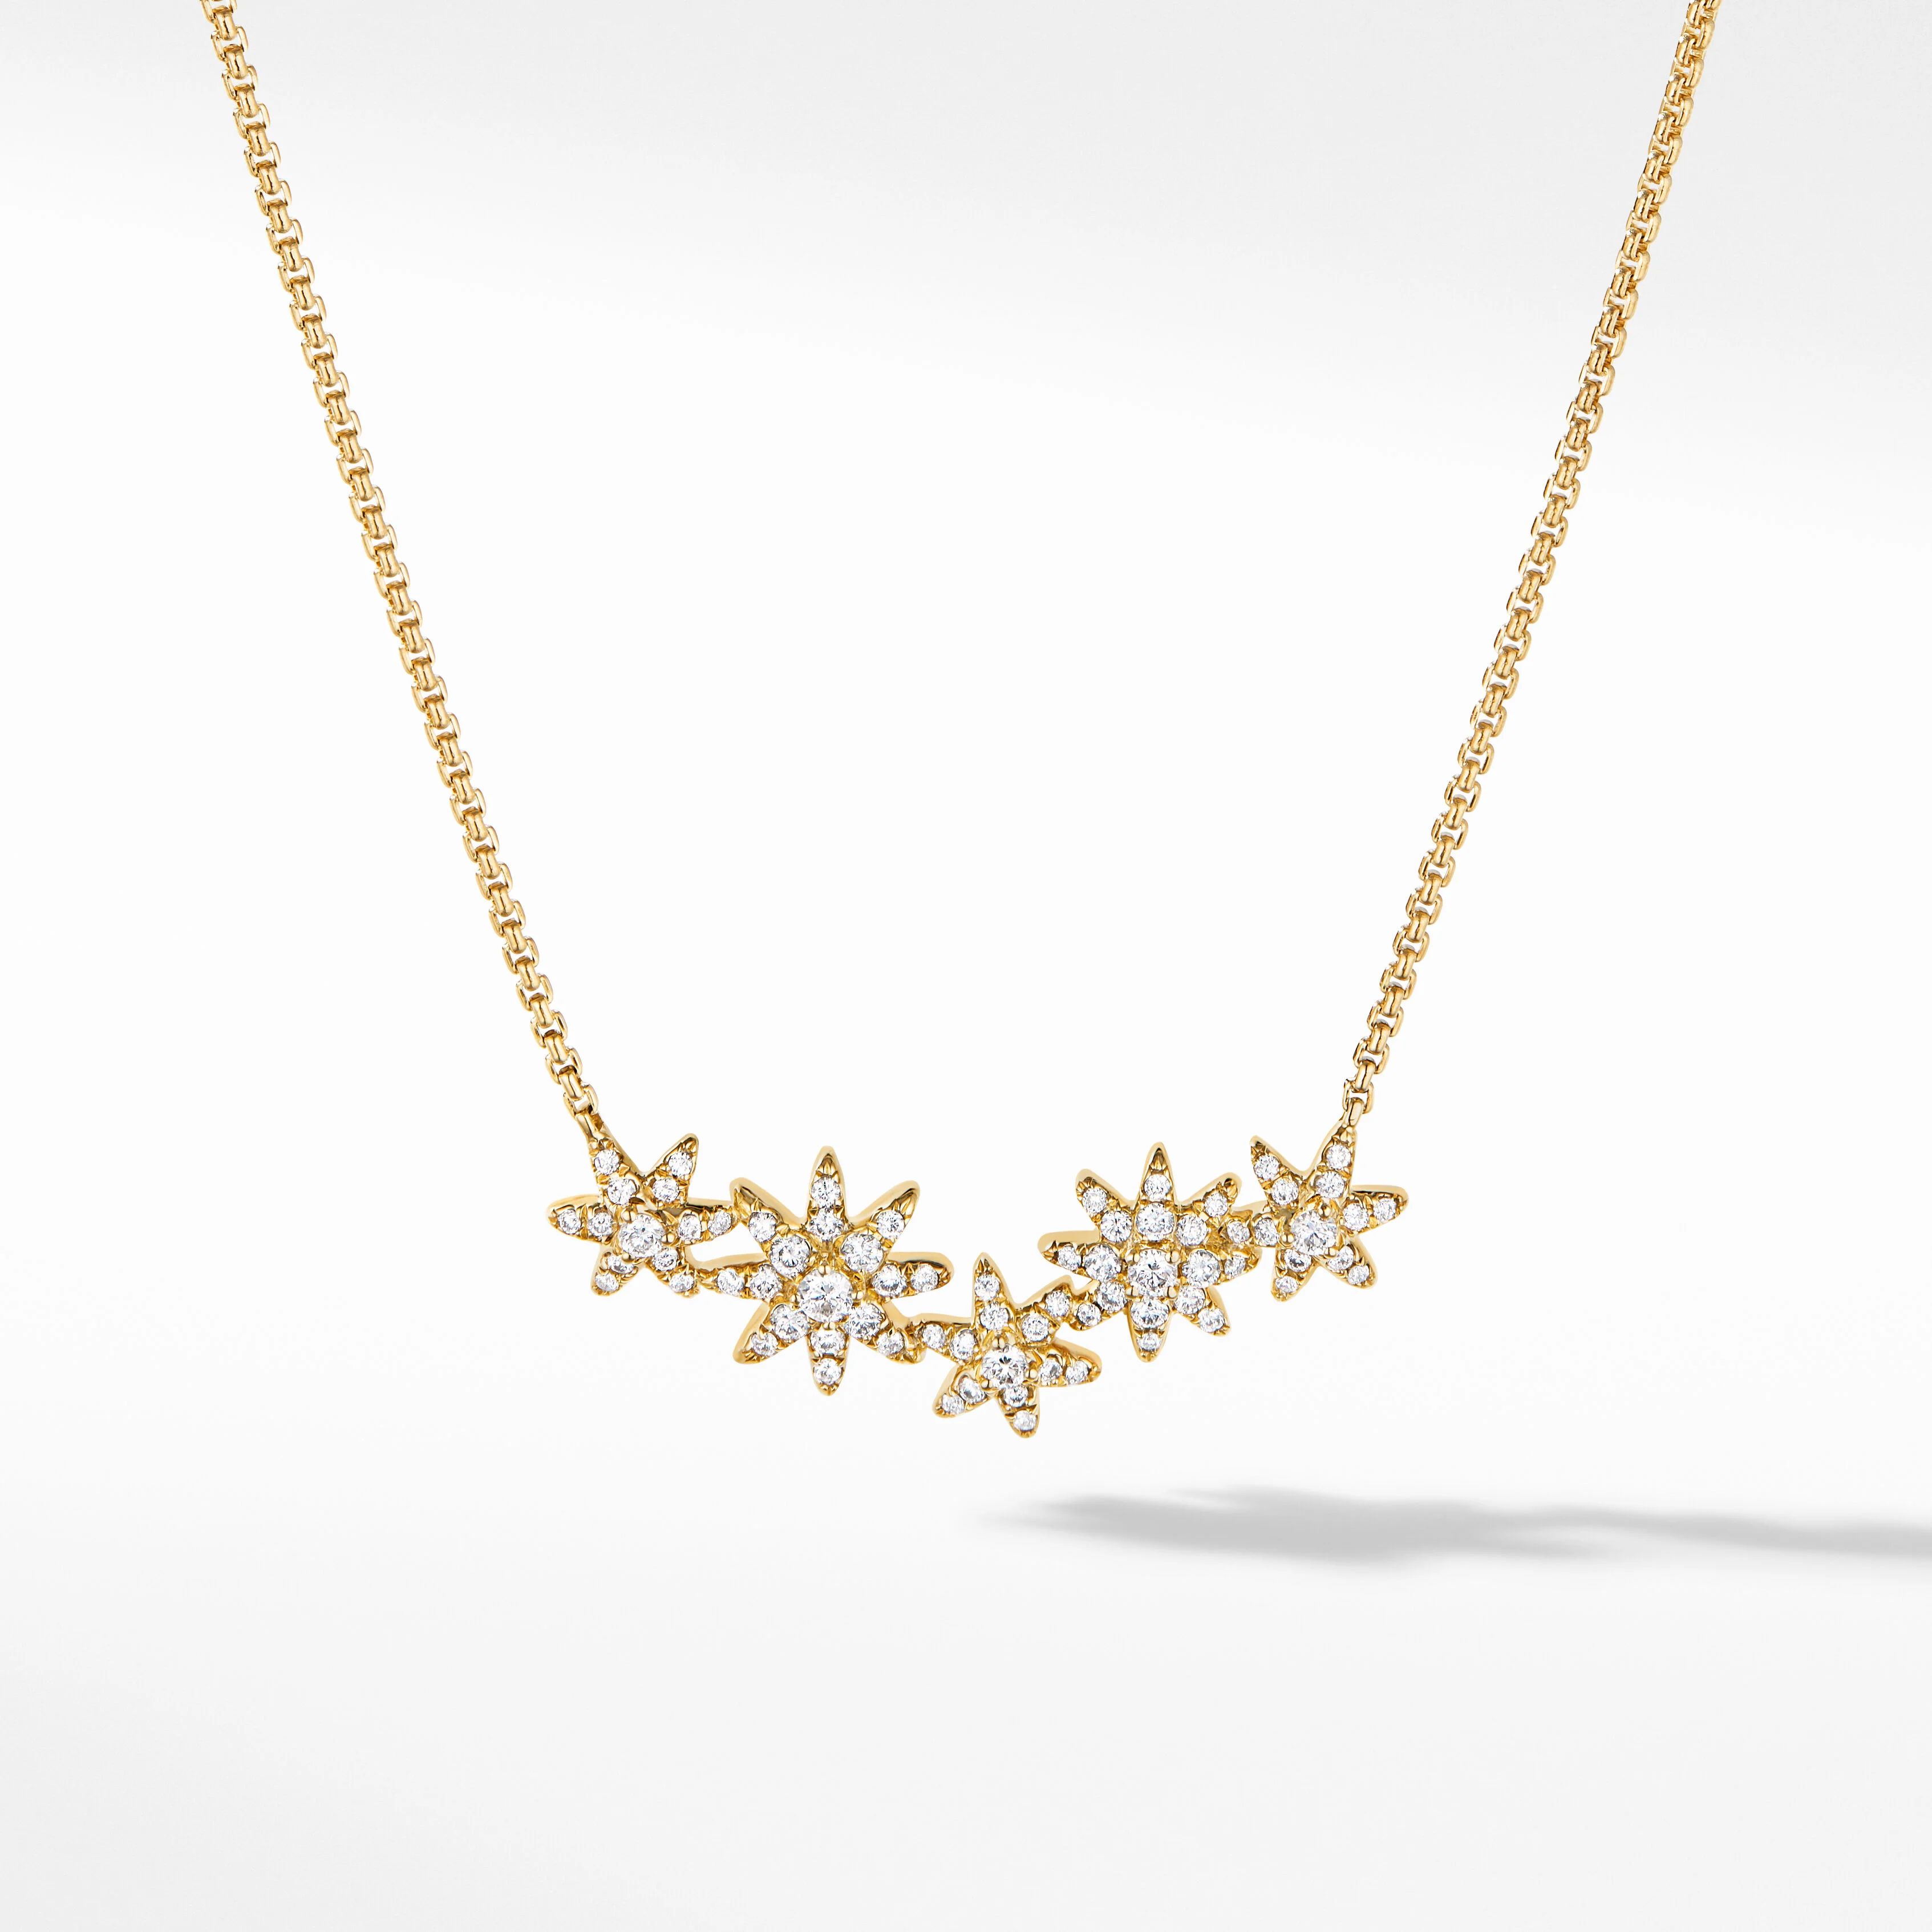 Starburst Cluster Station Necklace in 18K Yellow Gold with Pavé Diamonds | David Yurman